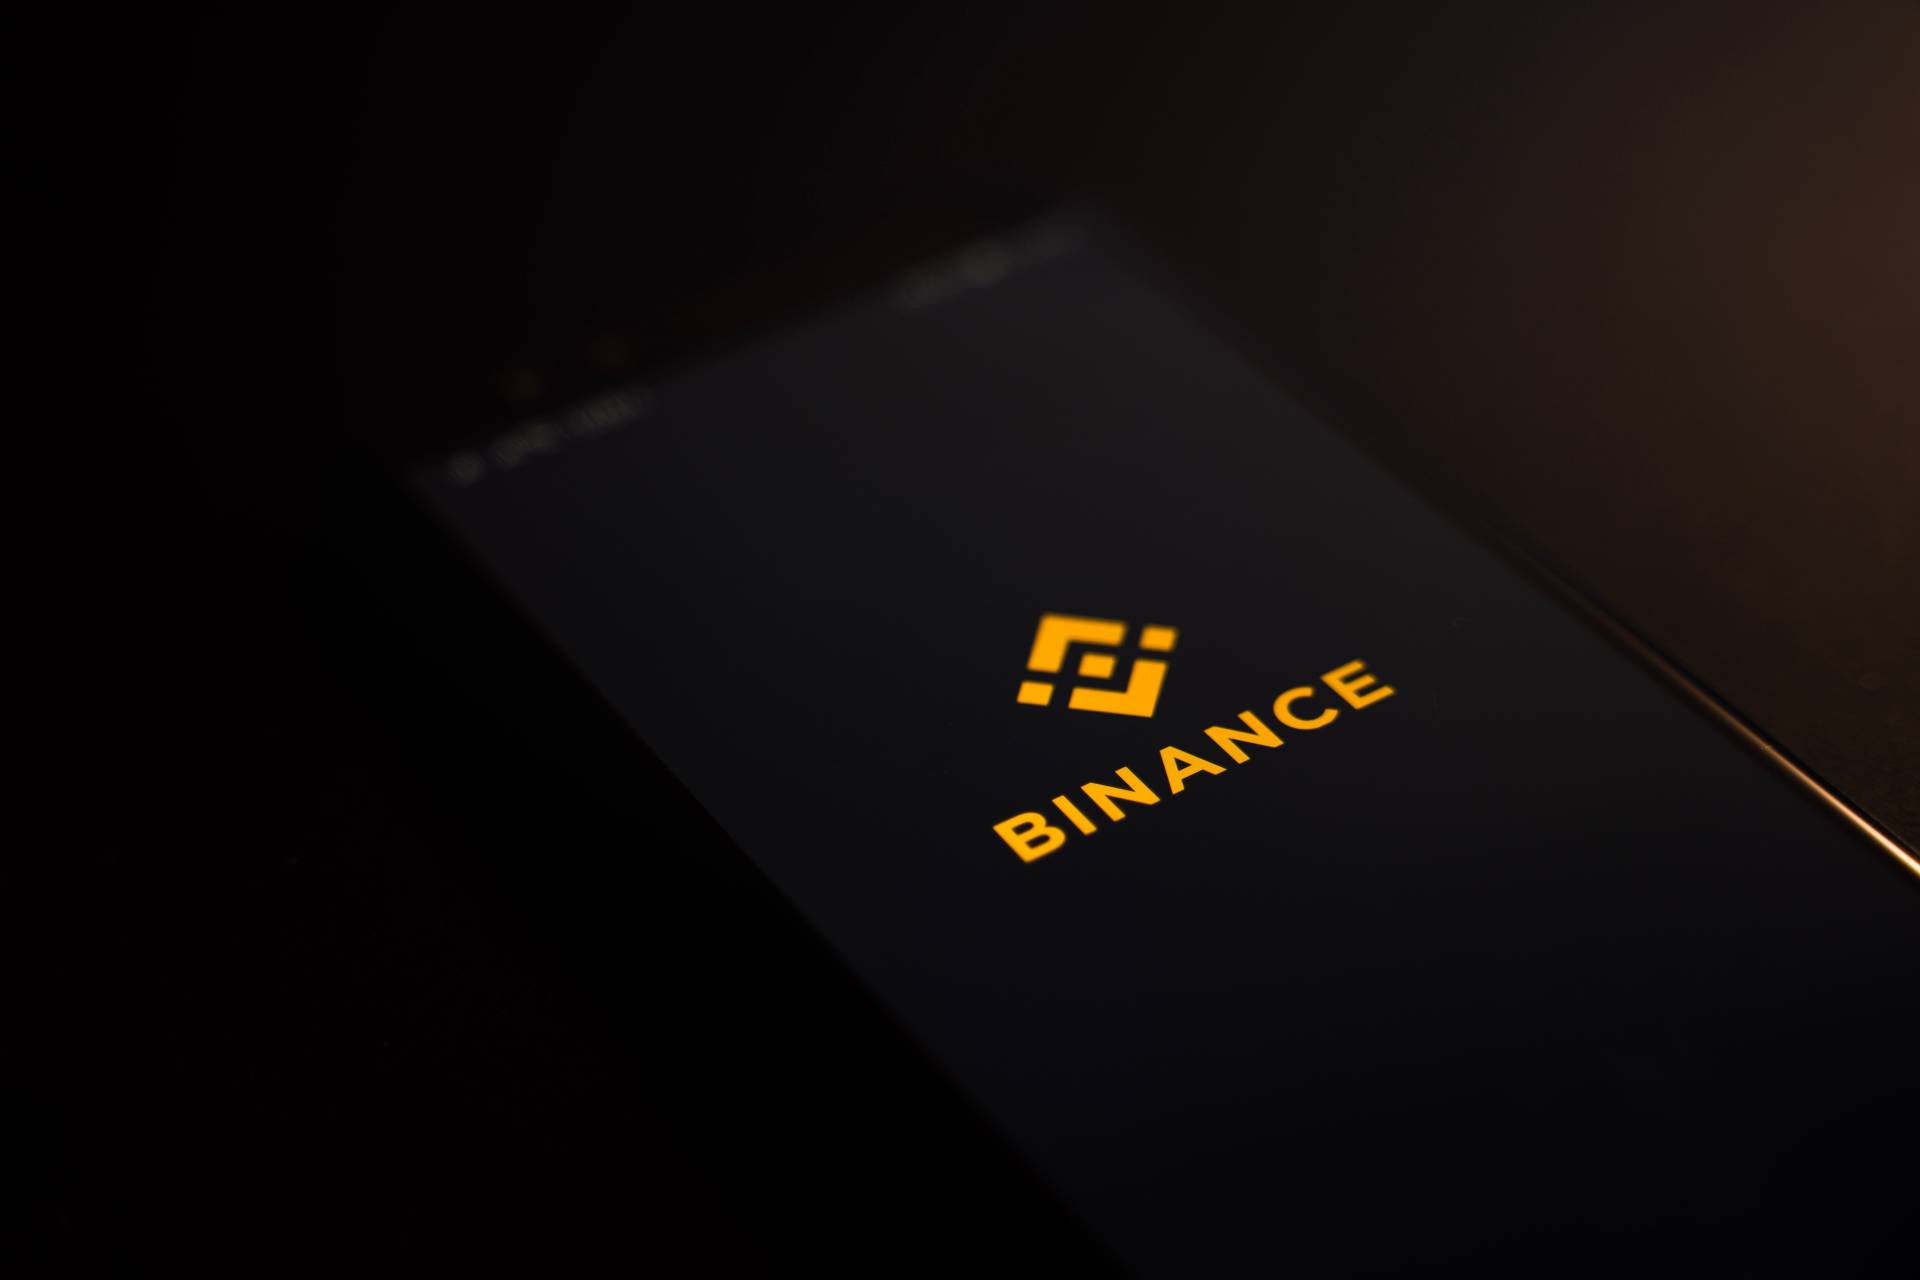 Binance Crypto